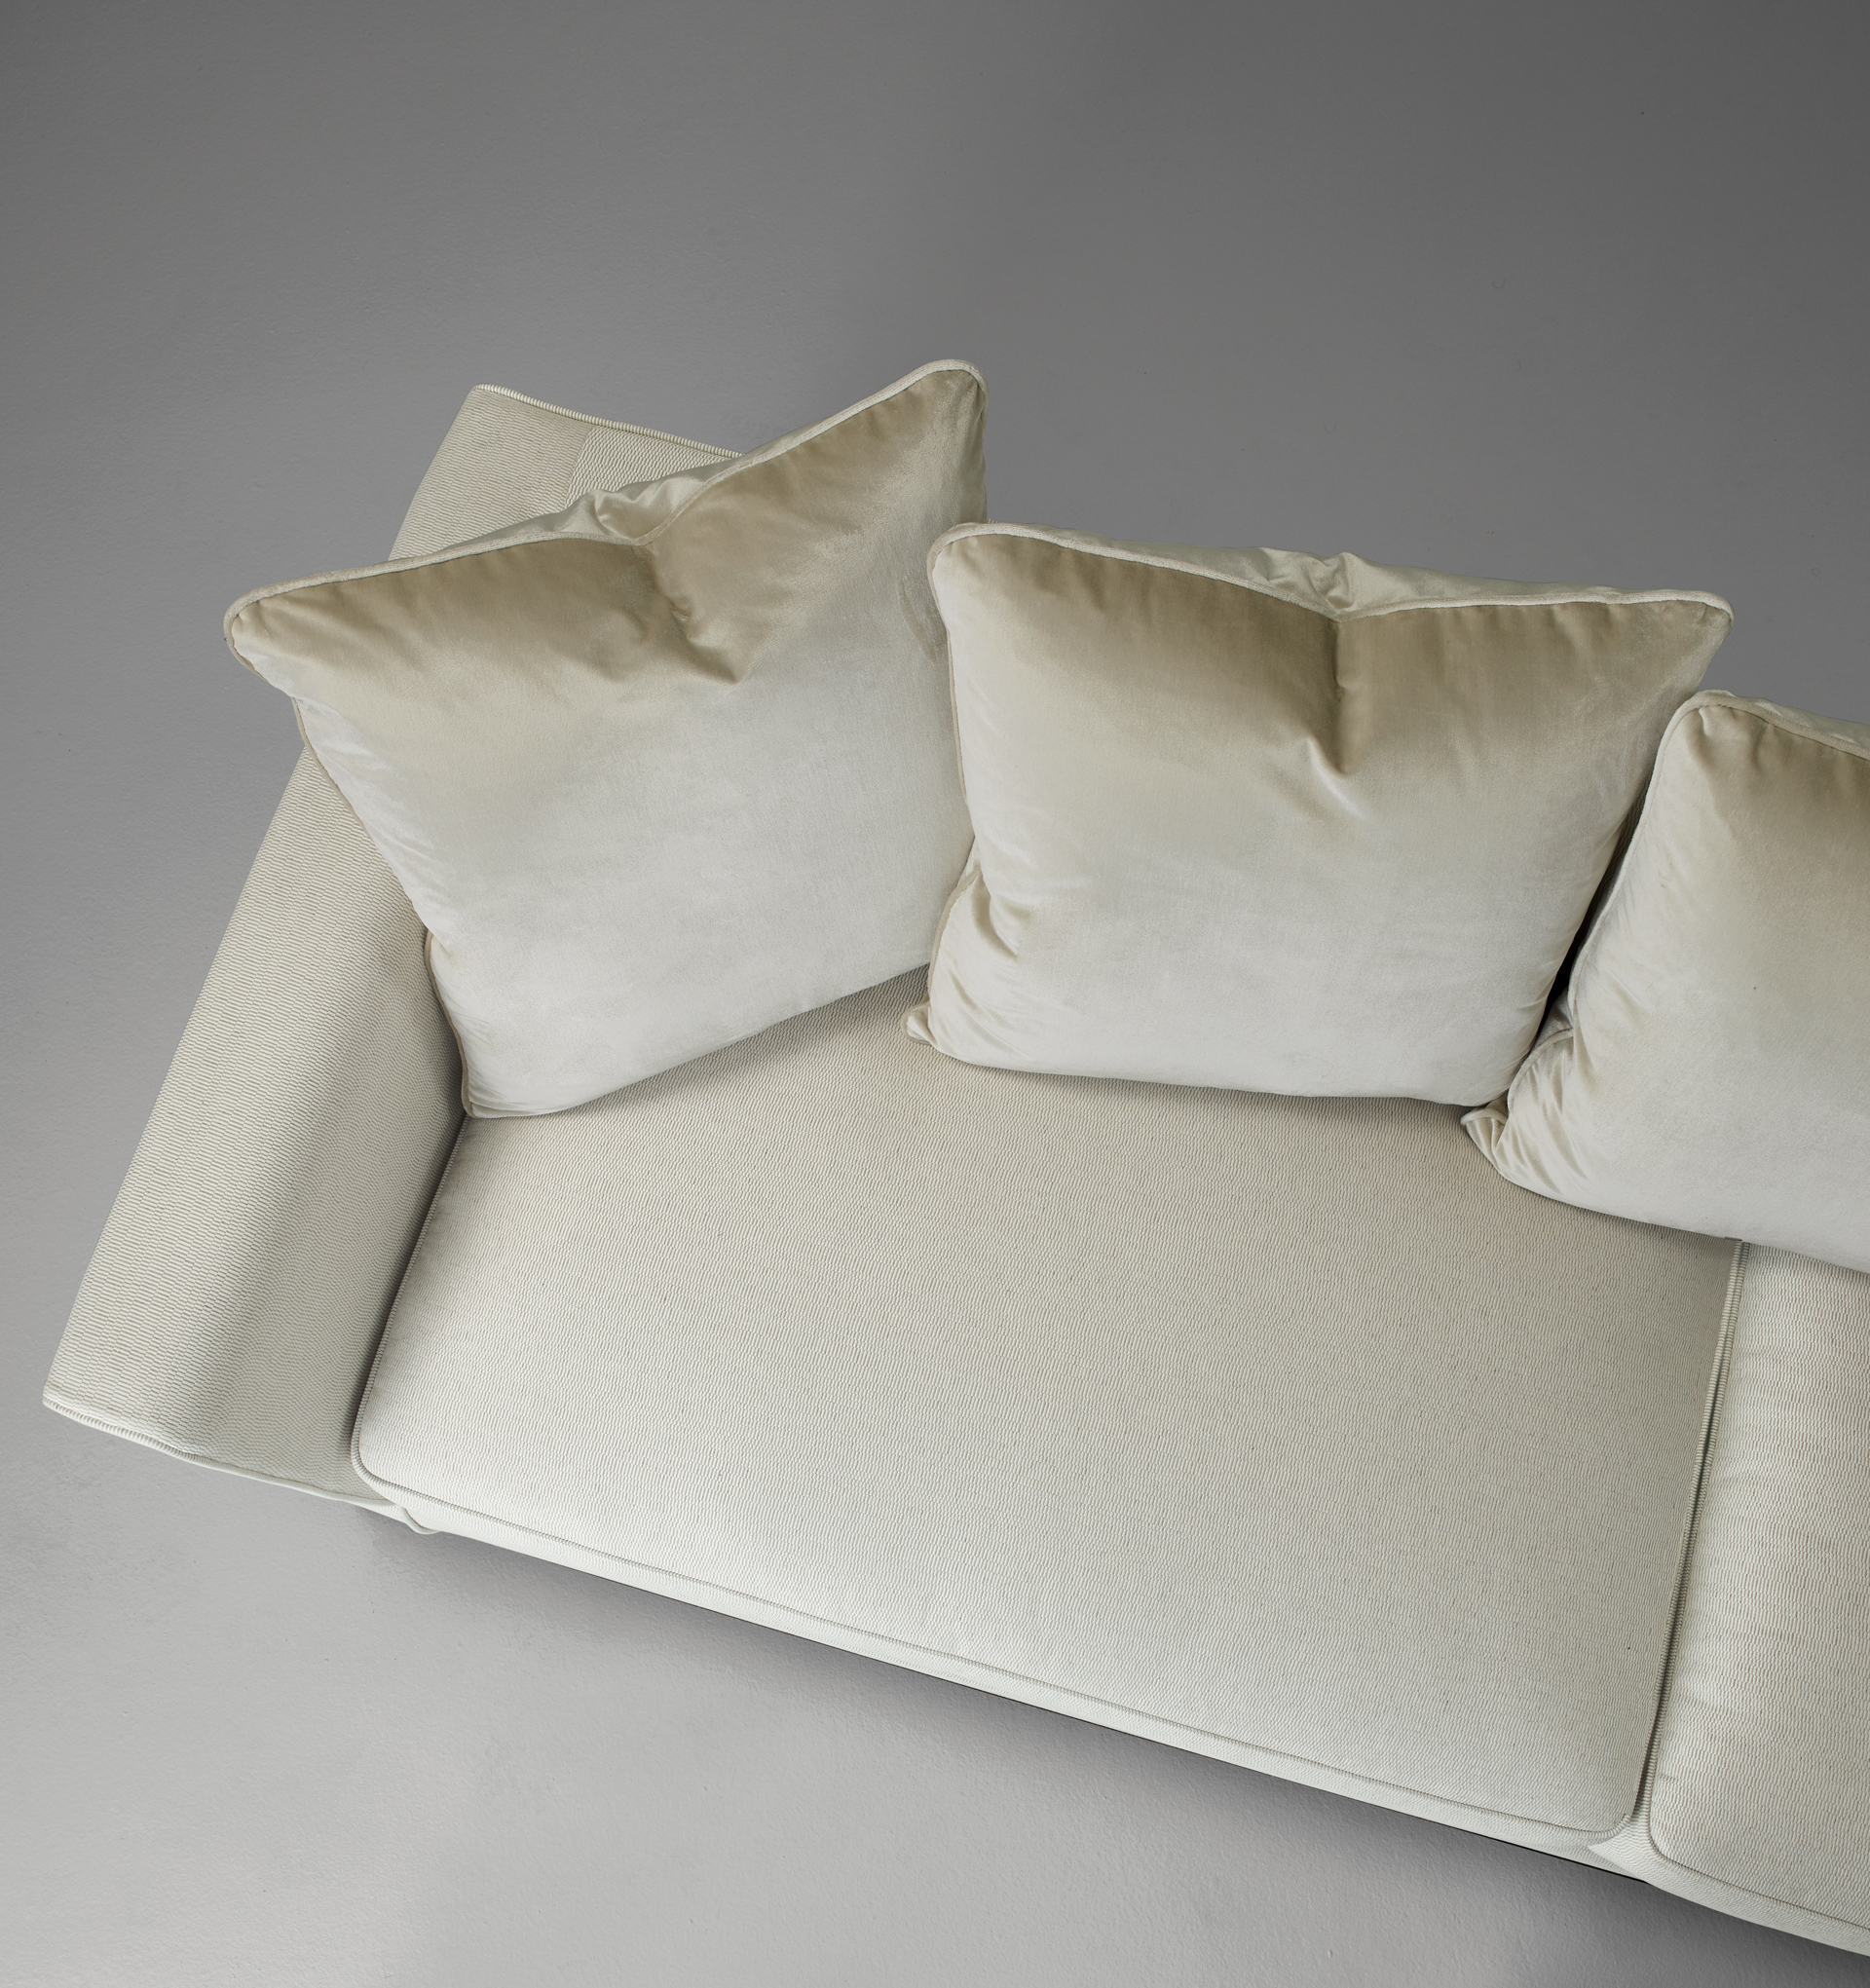 Wanda is a classic wooden sofa covered in fabric, from Promemoria's catalogue | Promemoria